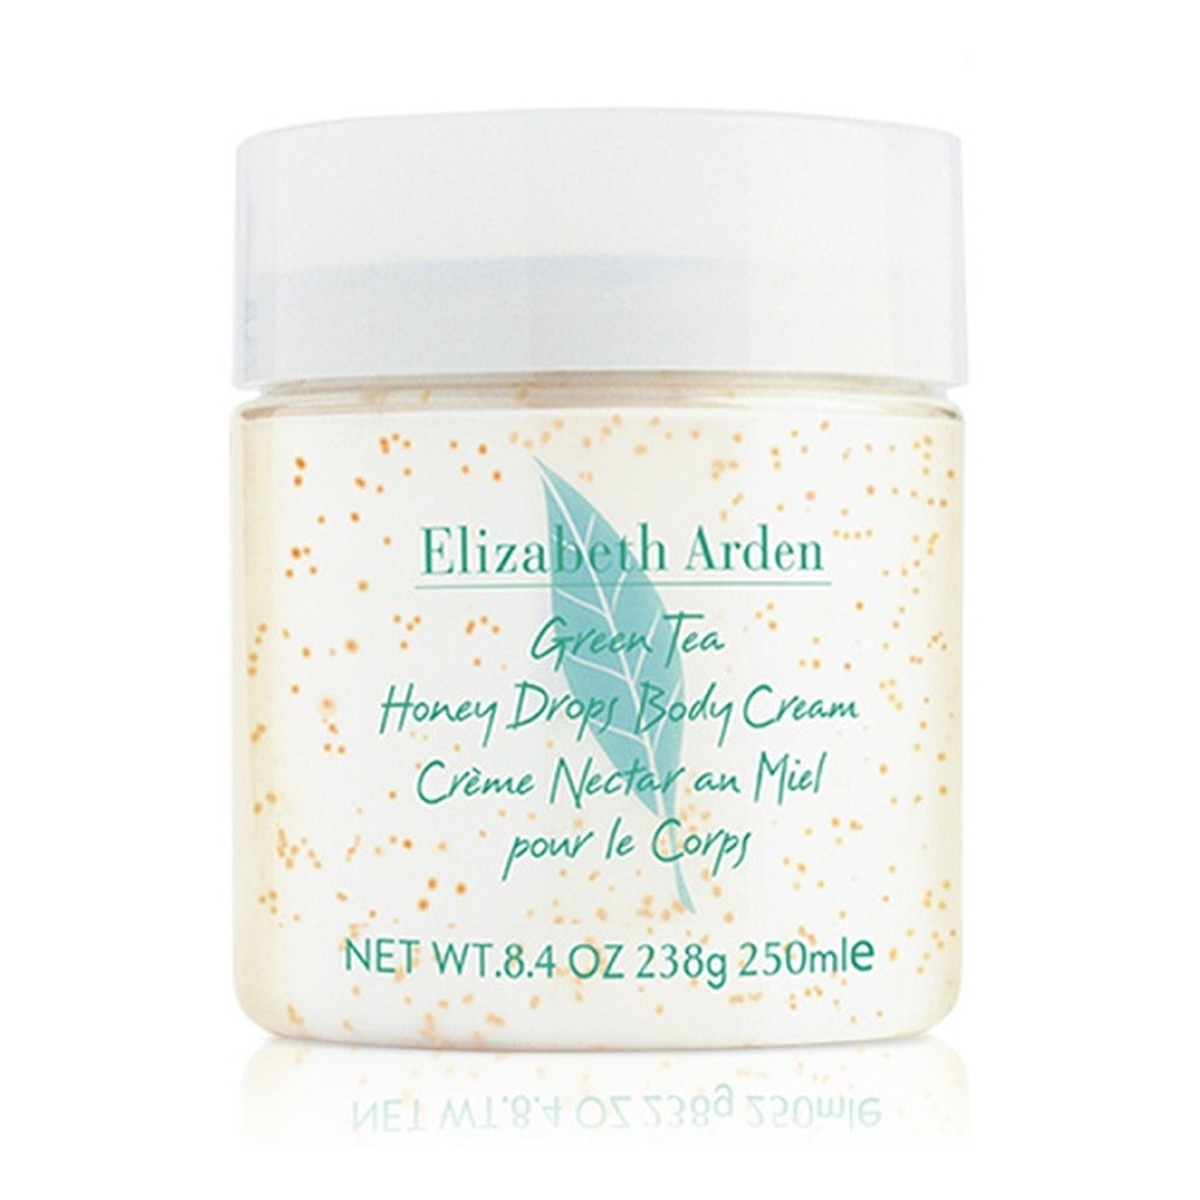 Elizabeth Arden Green Tea Honey Drops Body Cream krem do ciała 250ml